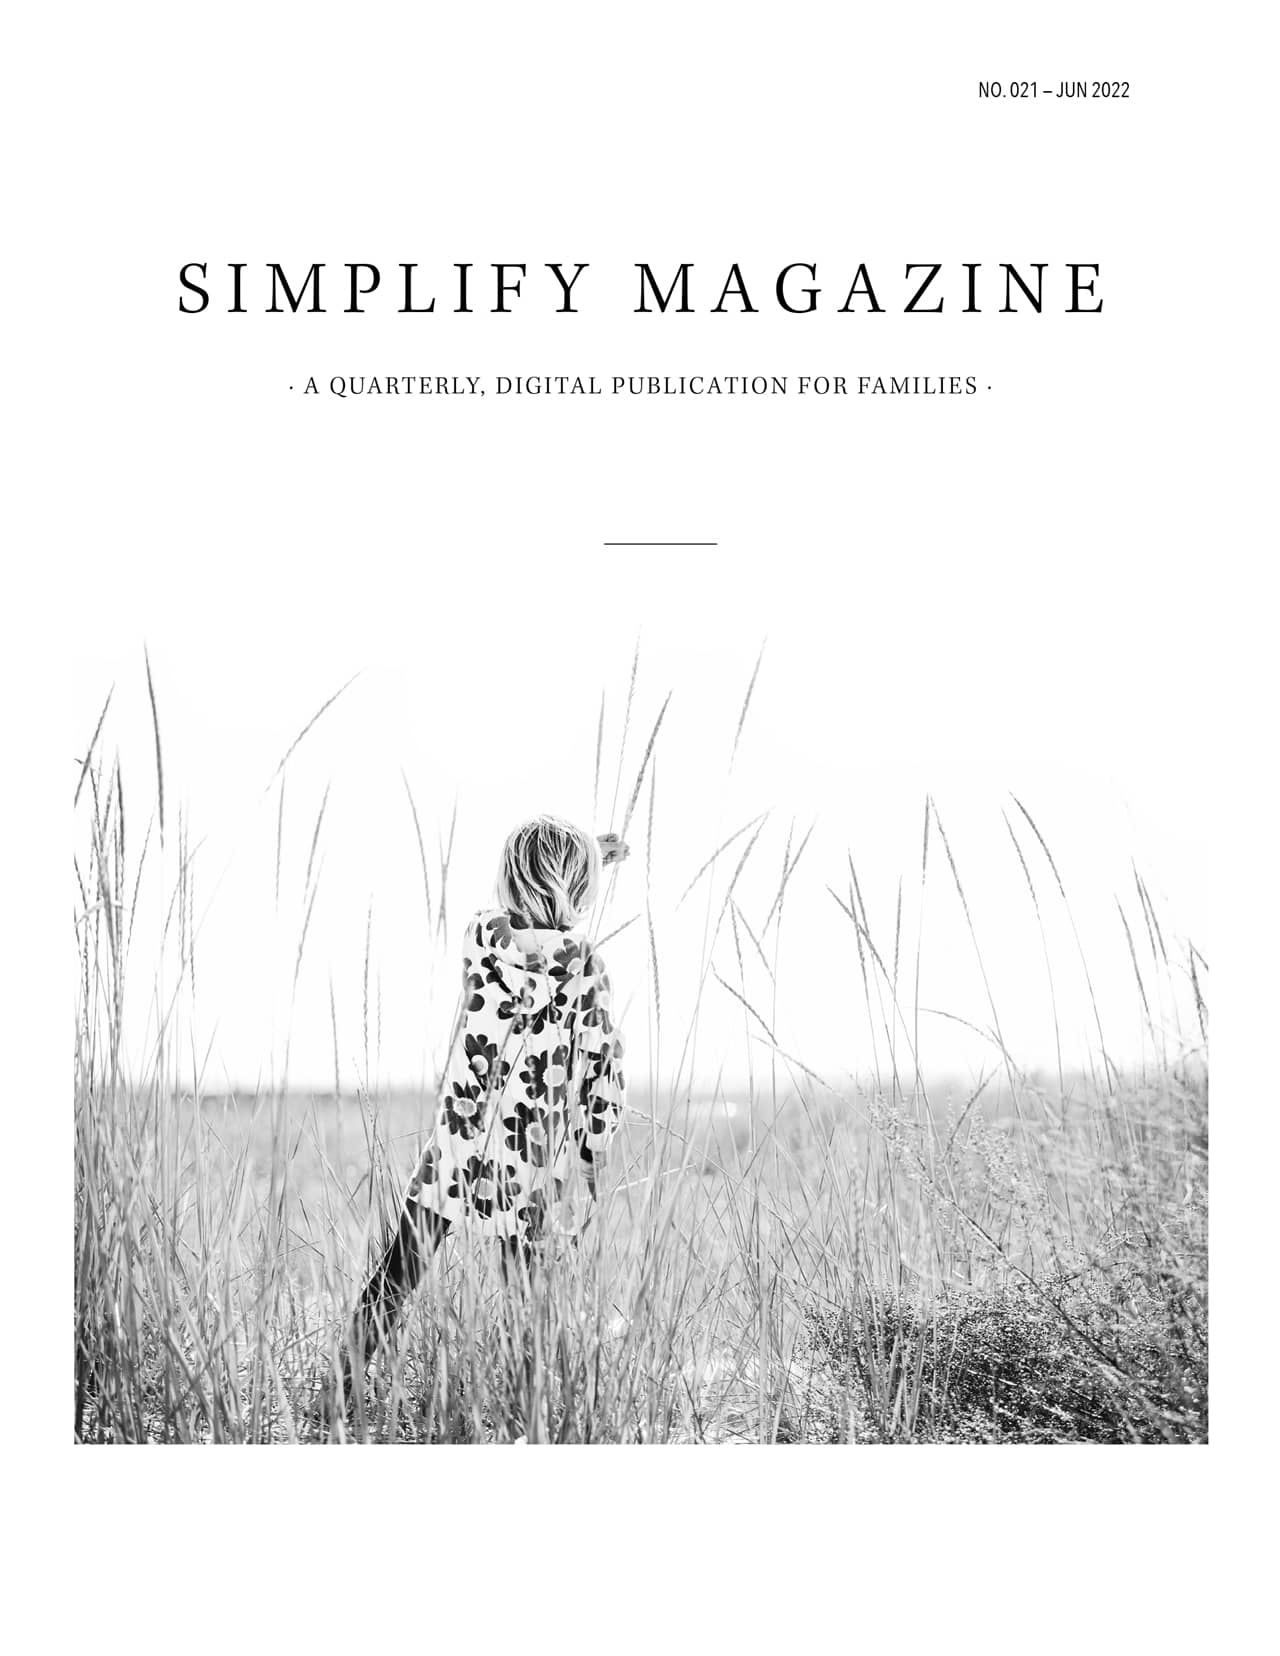 Simplify Magazine Issue #021